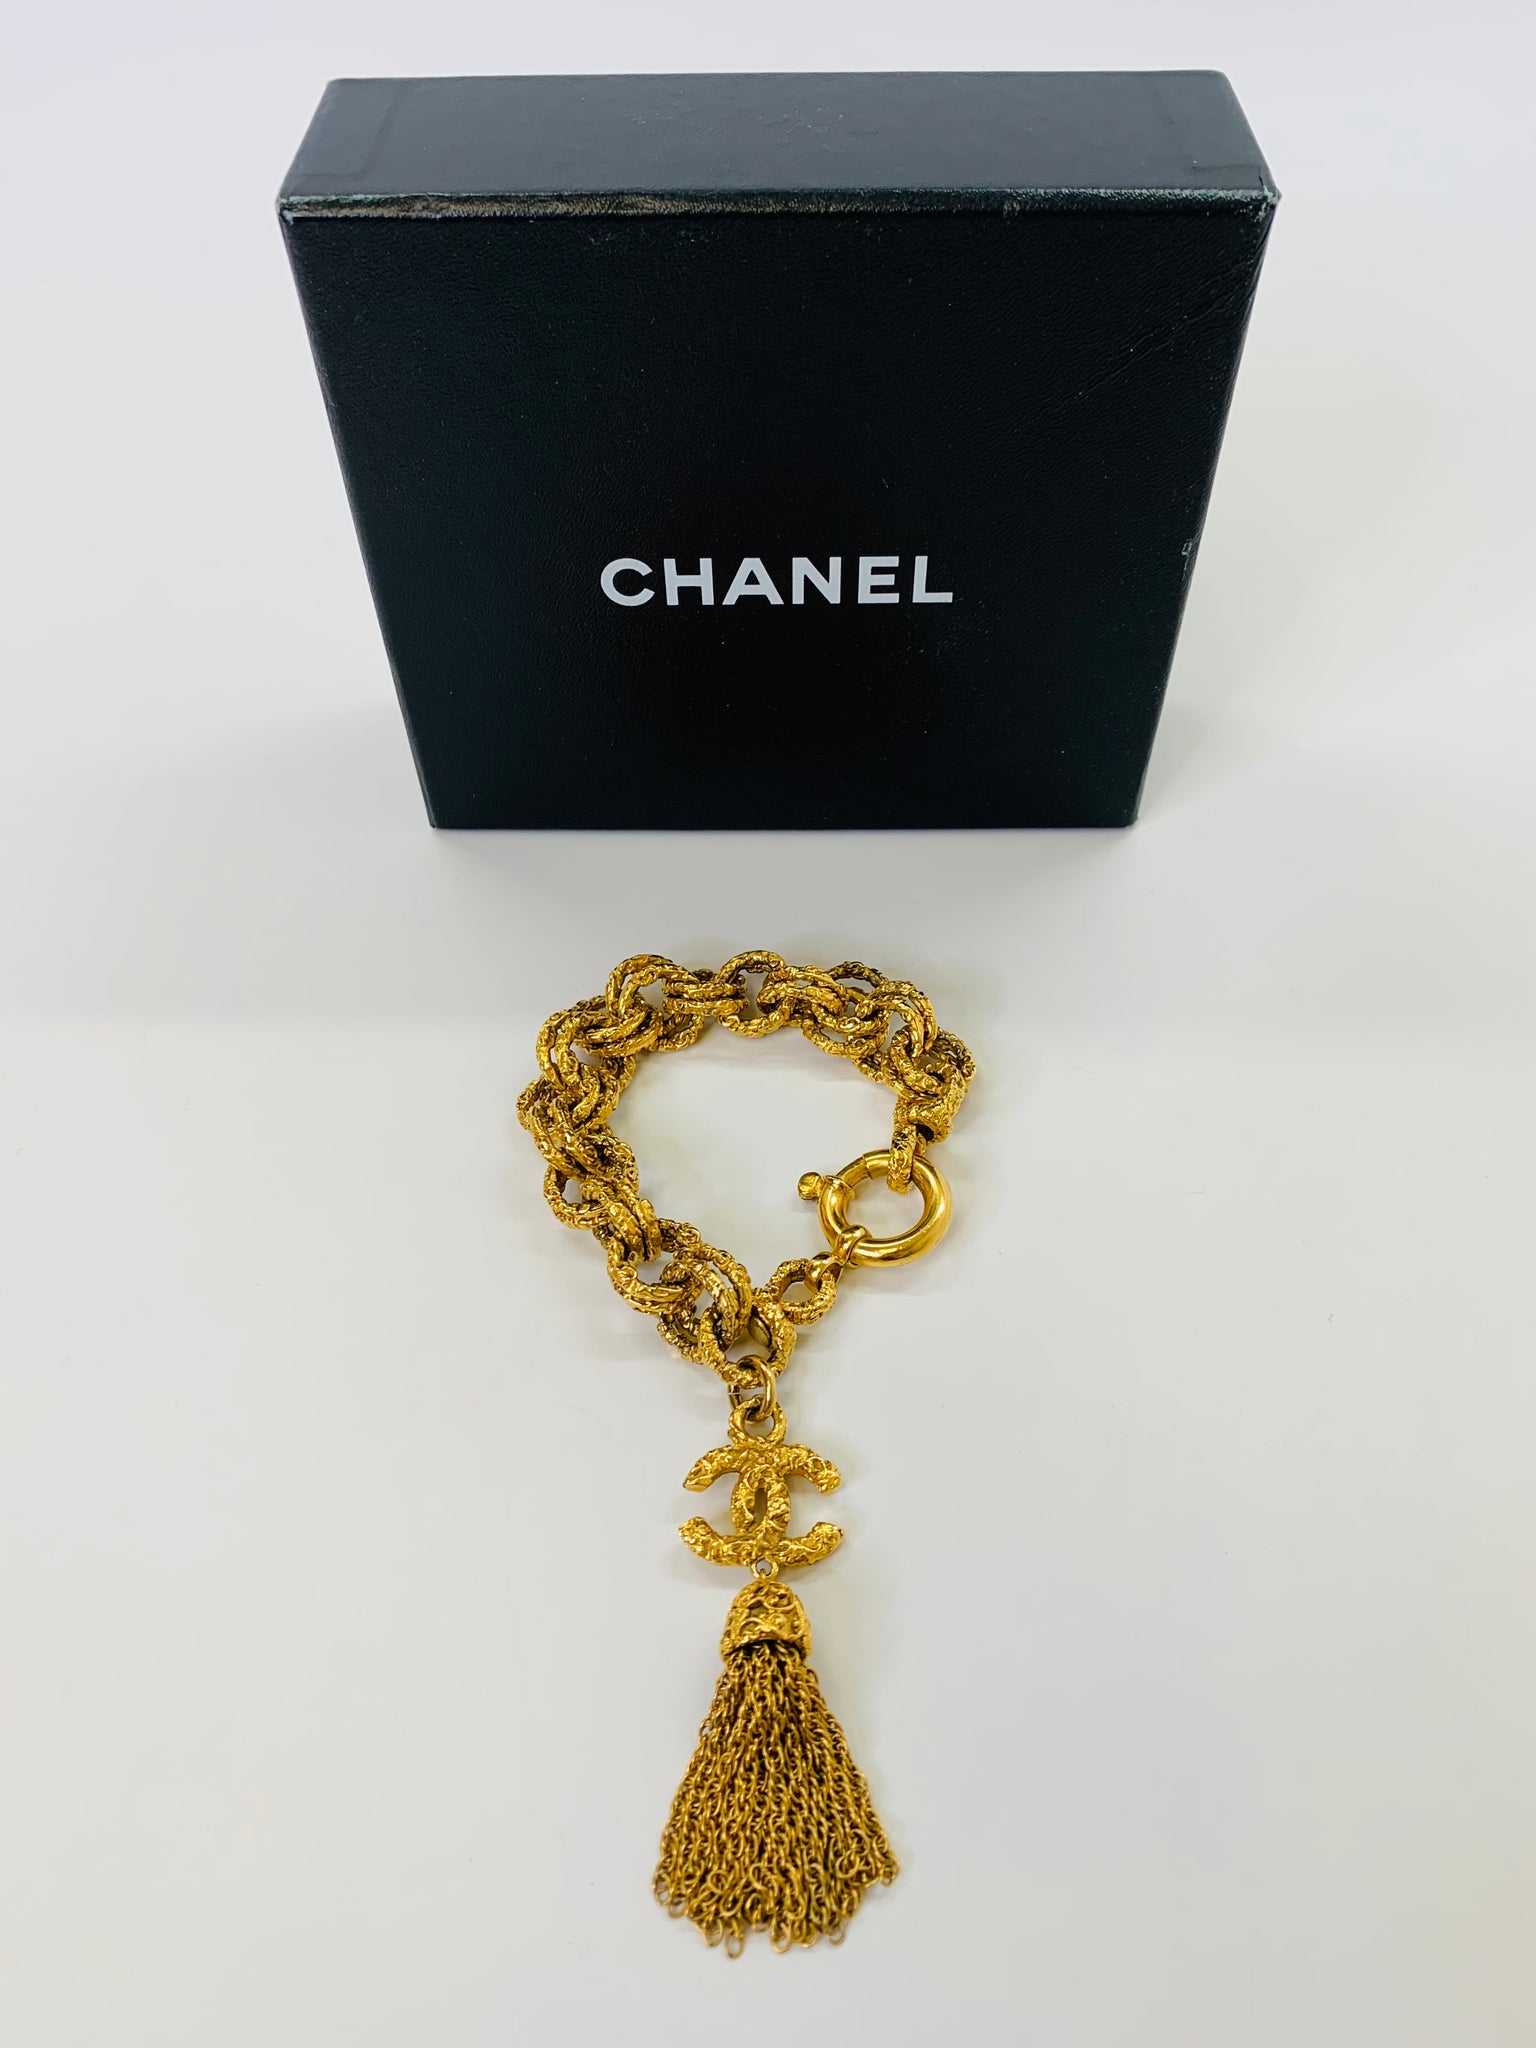 Chanel Black Leather and Silvertone Chain CC Logo Belt - Yoogi's Closet